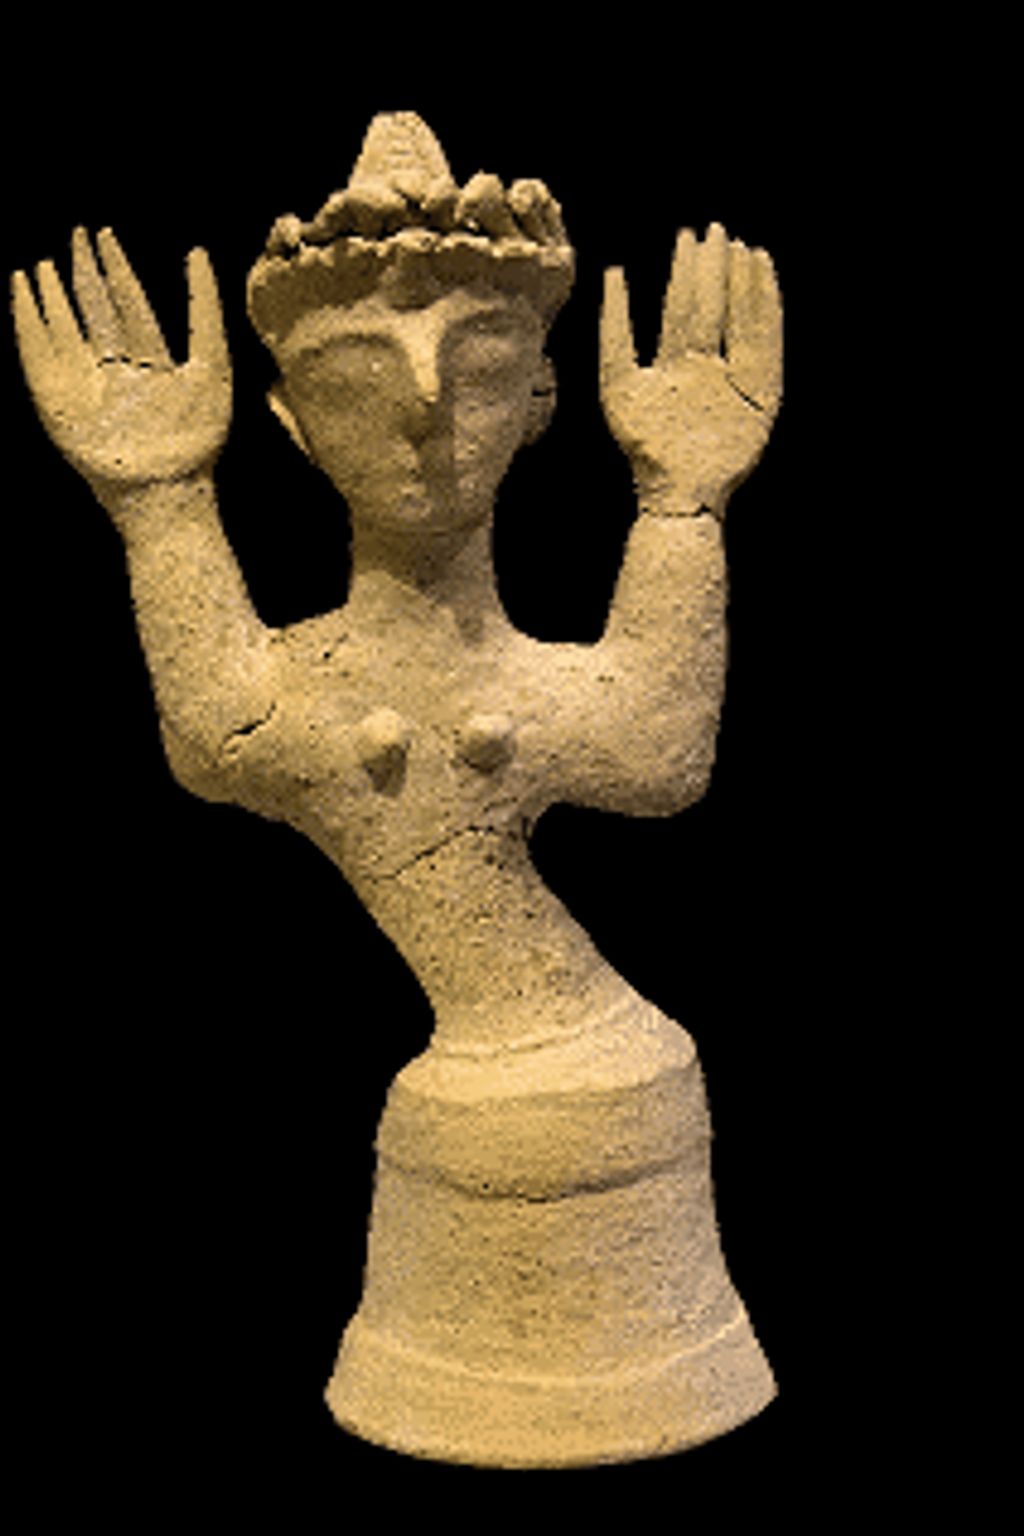 Nina Paley
őskori szobor 